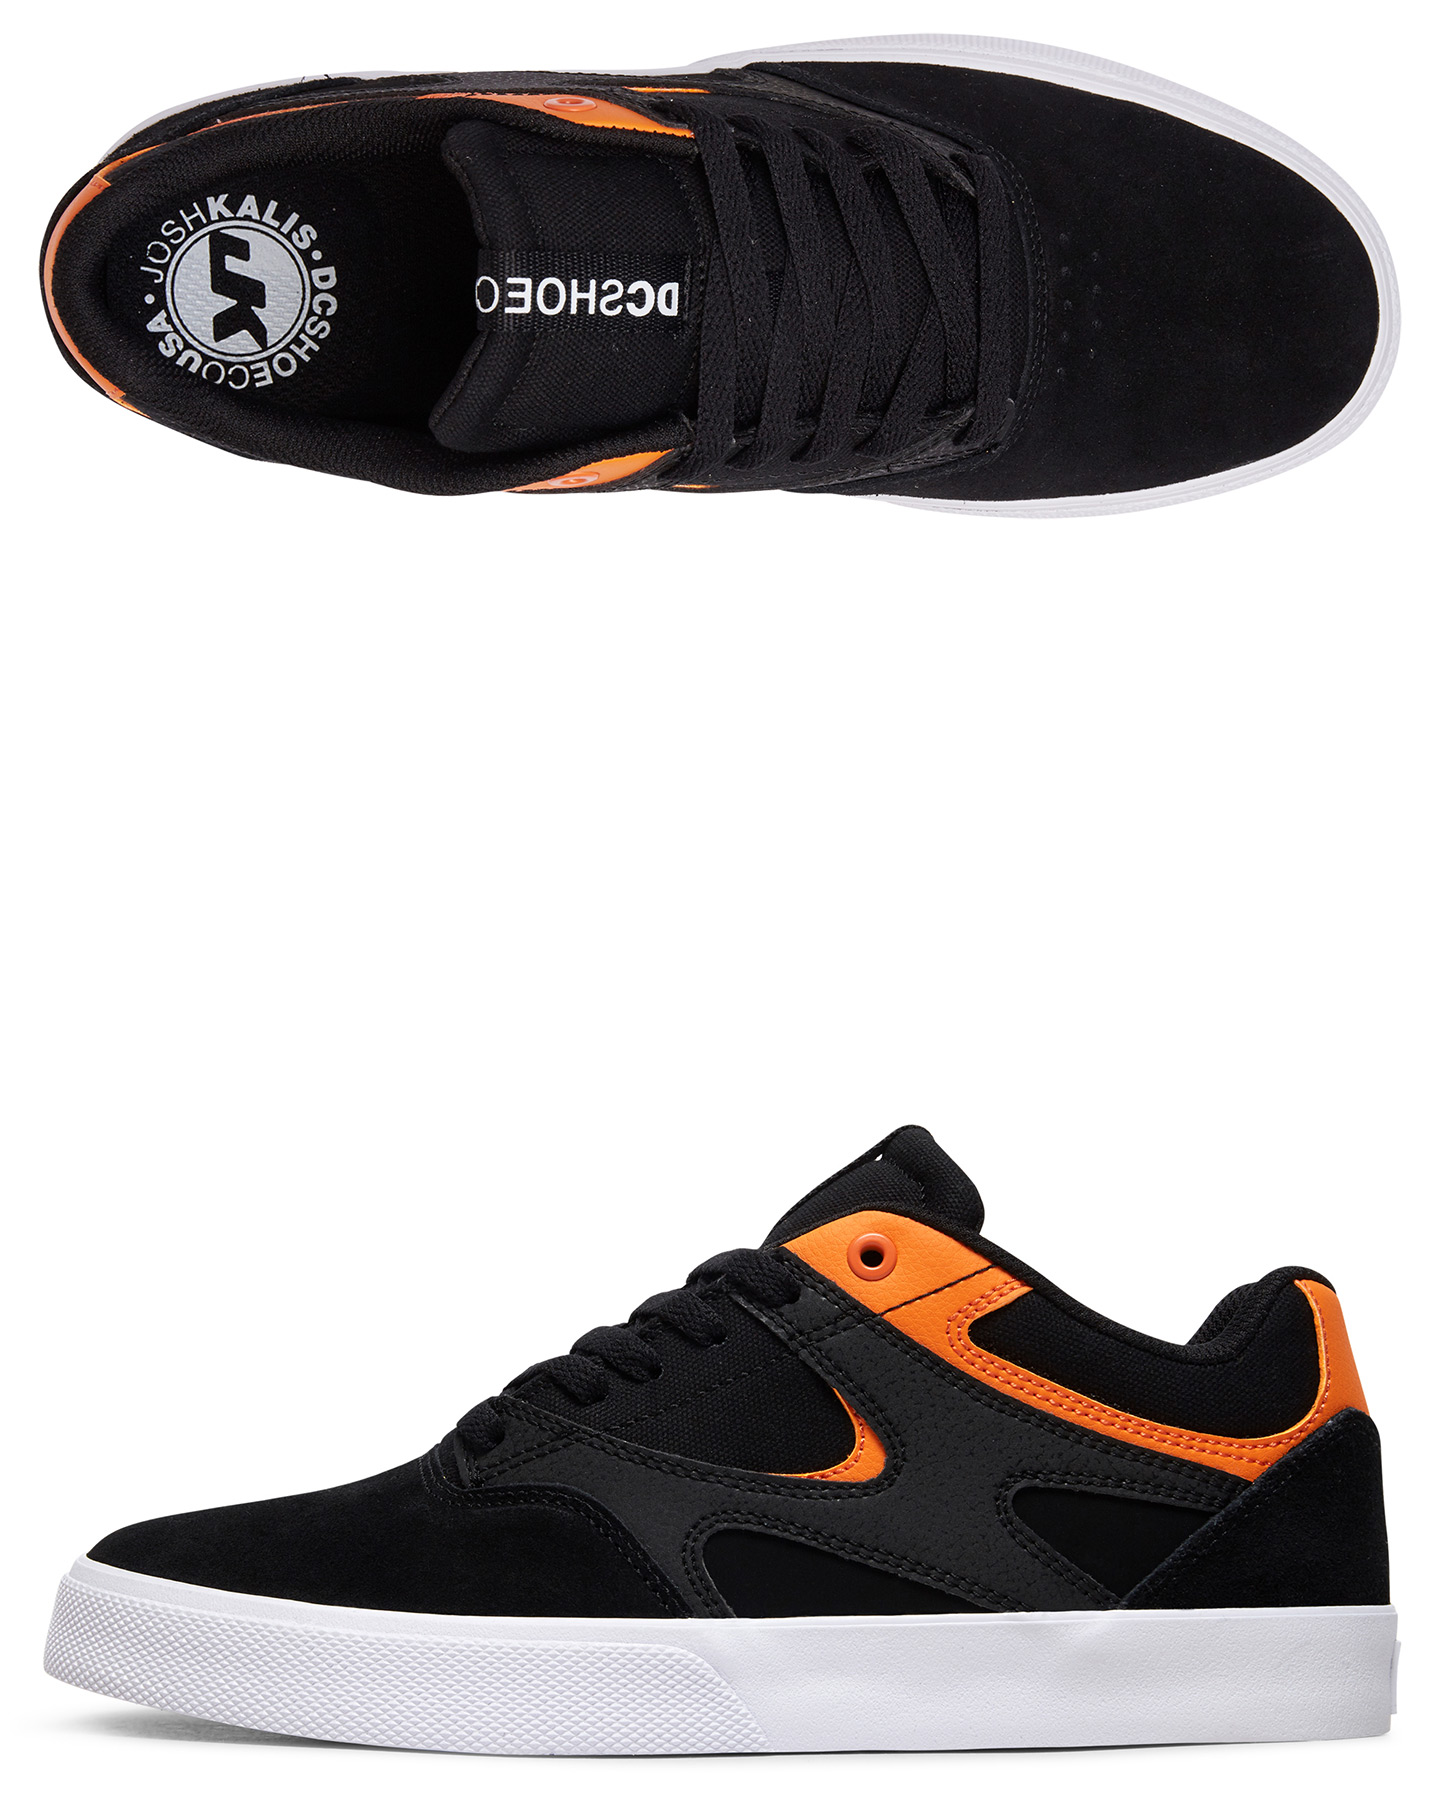 Dc Shoes Mens Kalis Vulc S Shoe - Black 